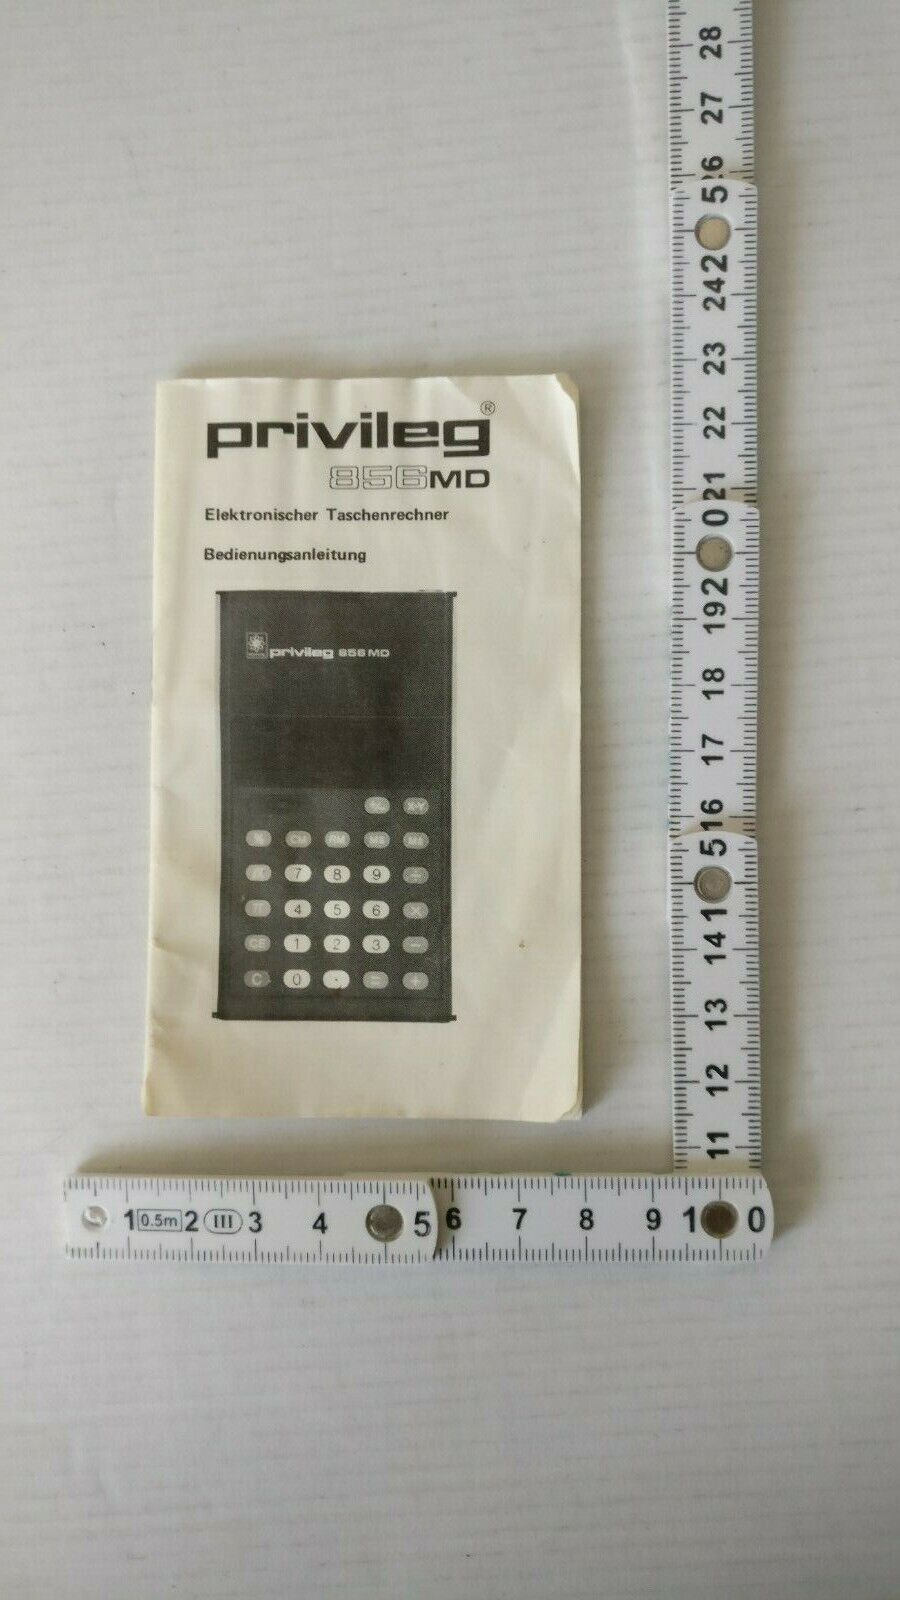 Privileg 856MD electronic calculator user manual guide of use German language